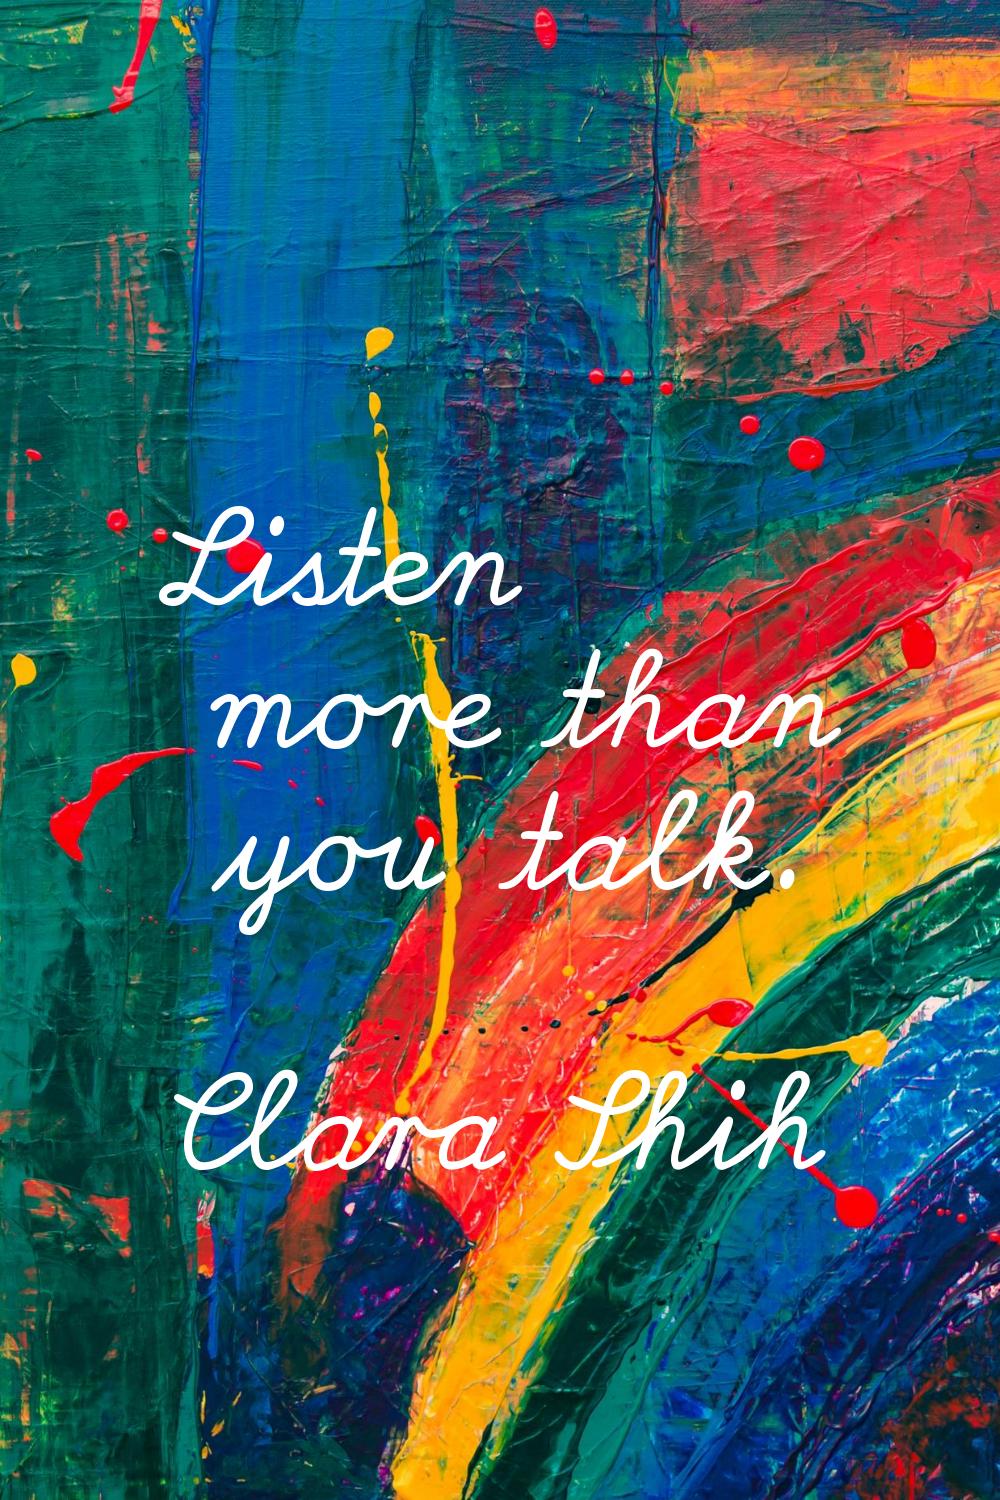 Listen more than you talk.